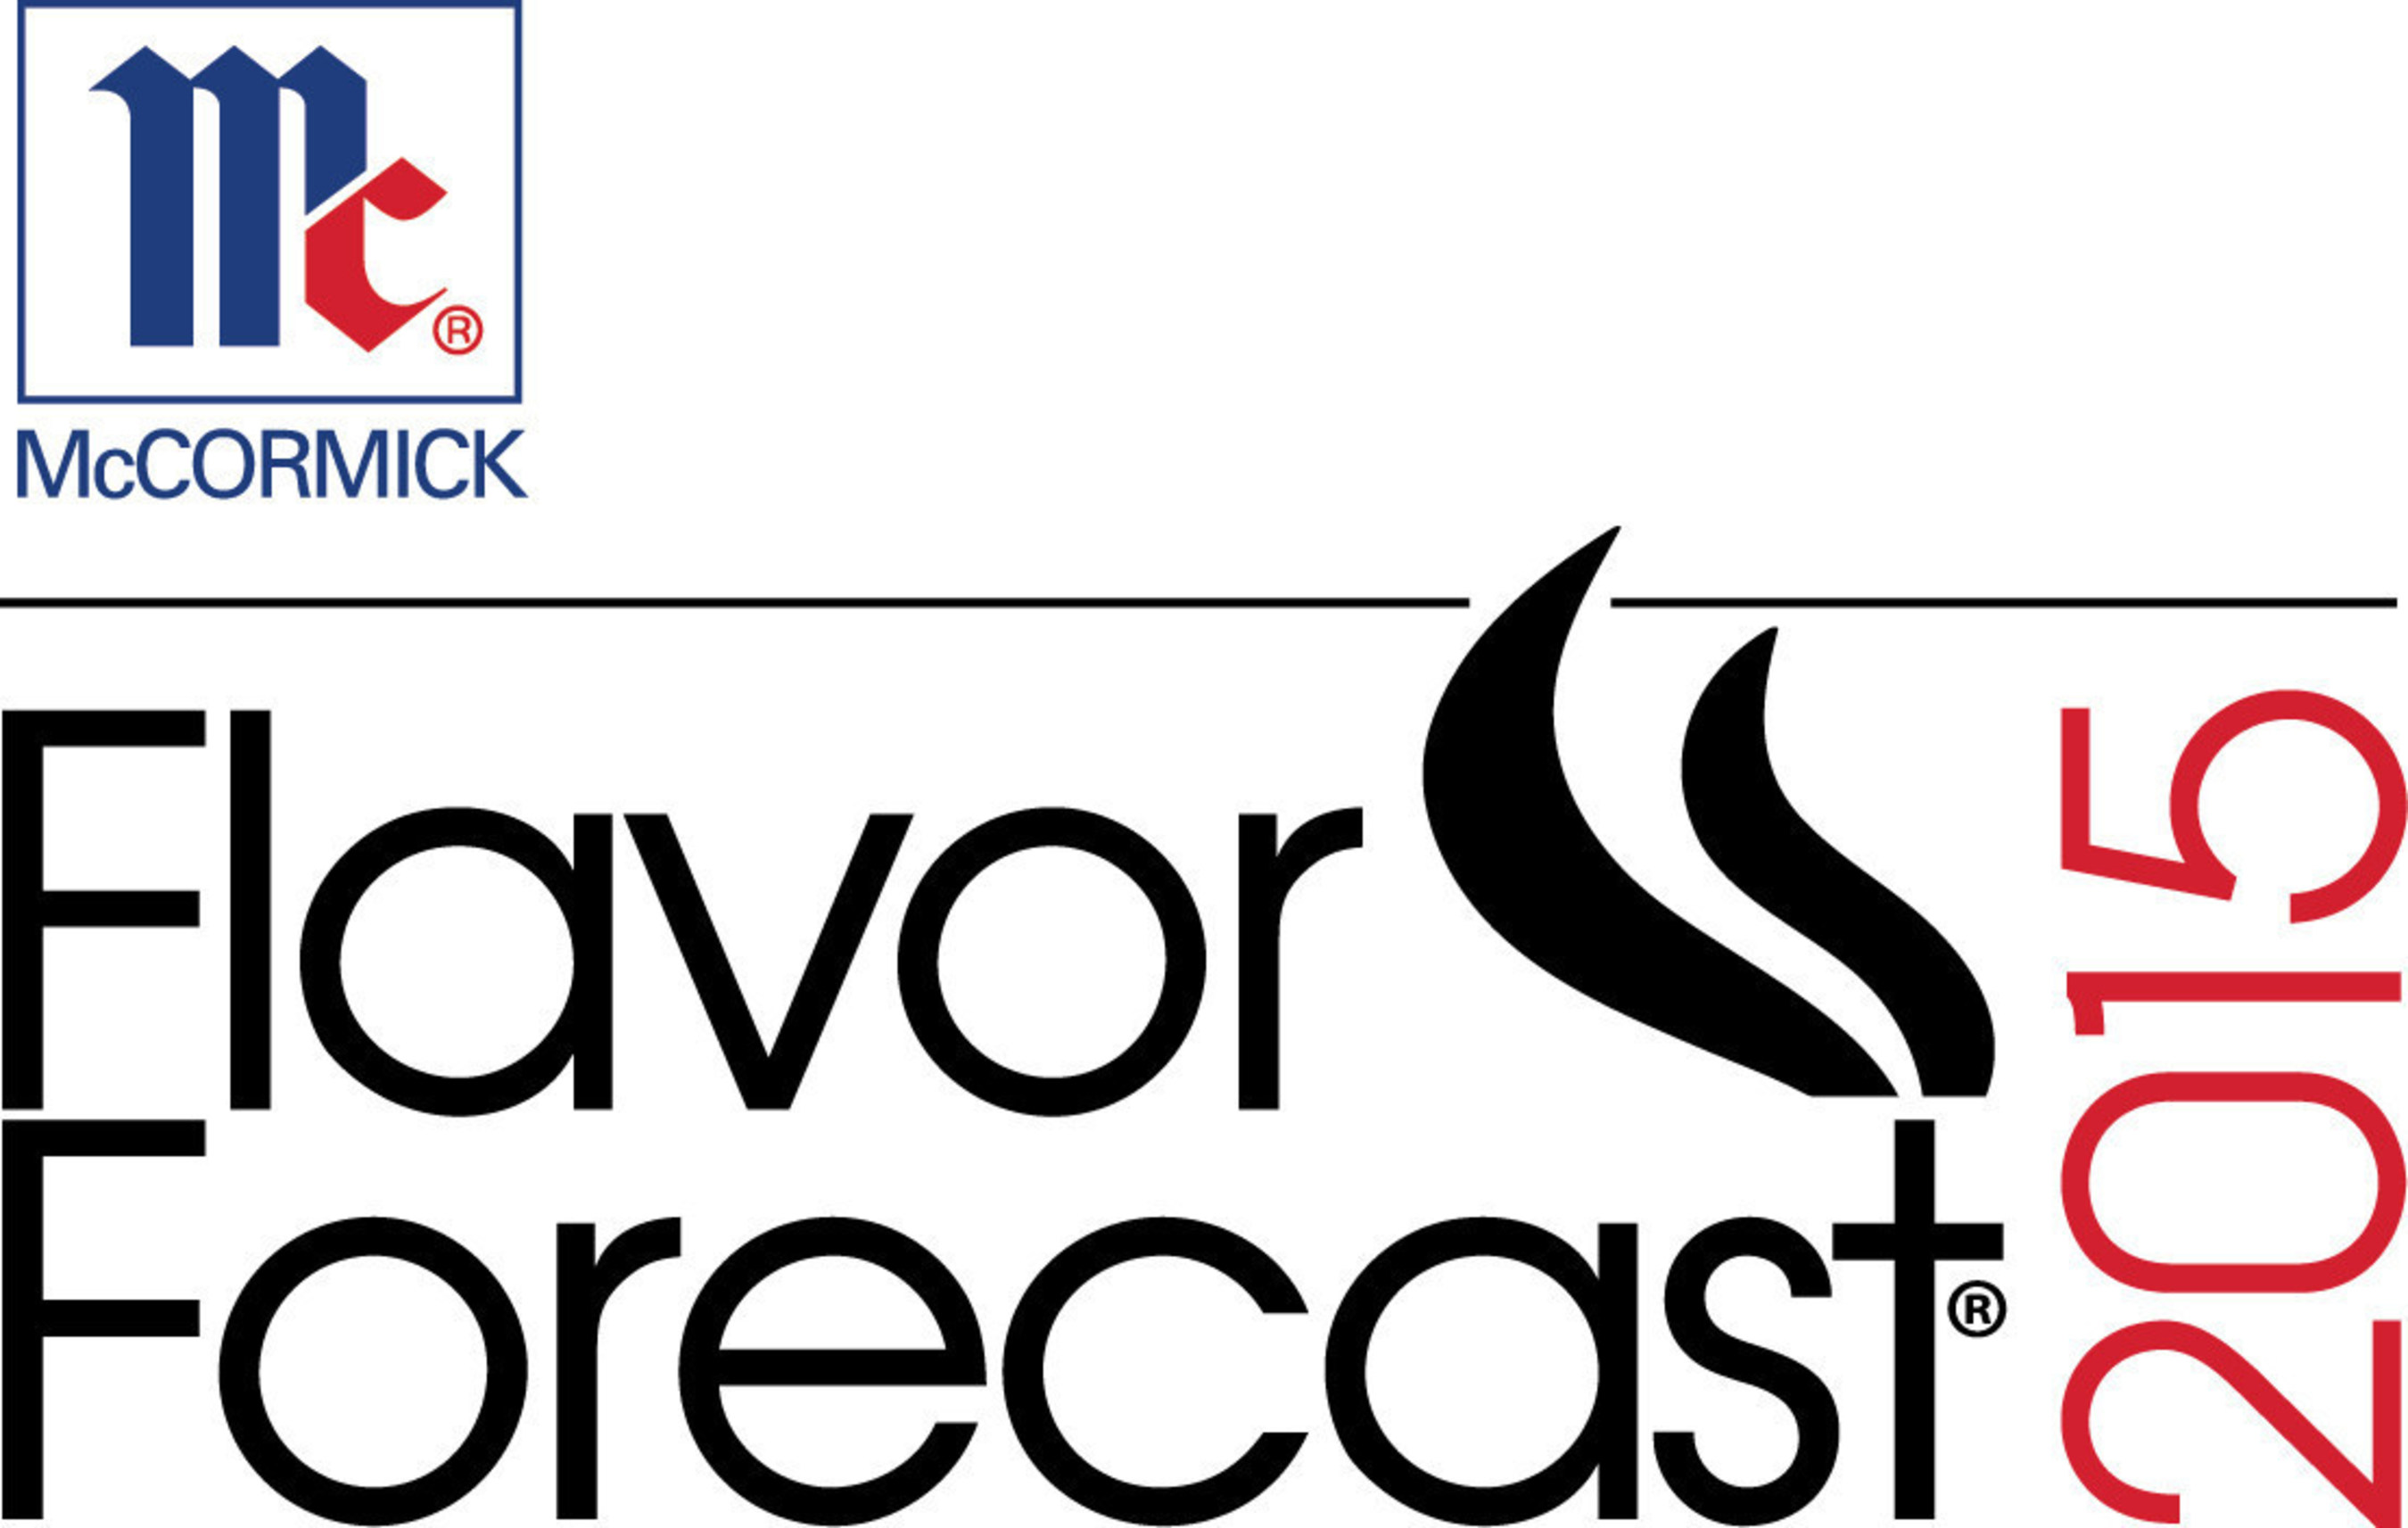 McCormick(R) Flavor Forecast(R) 2015